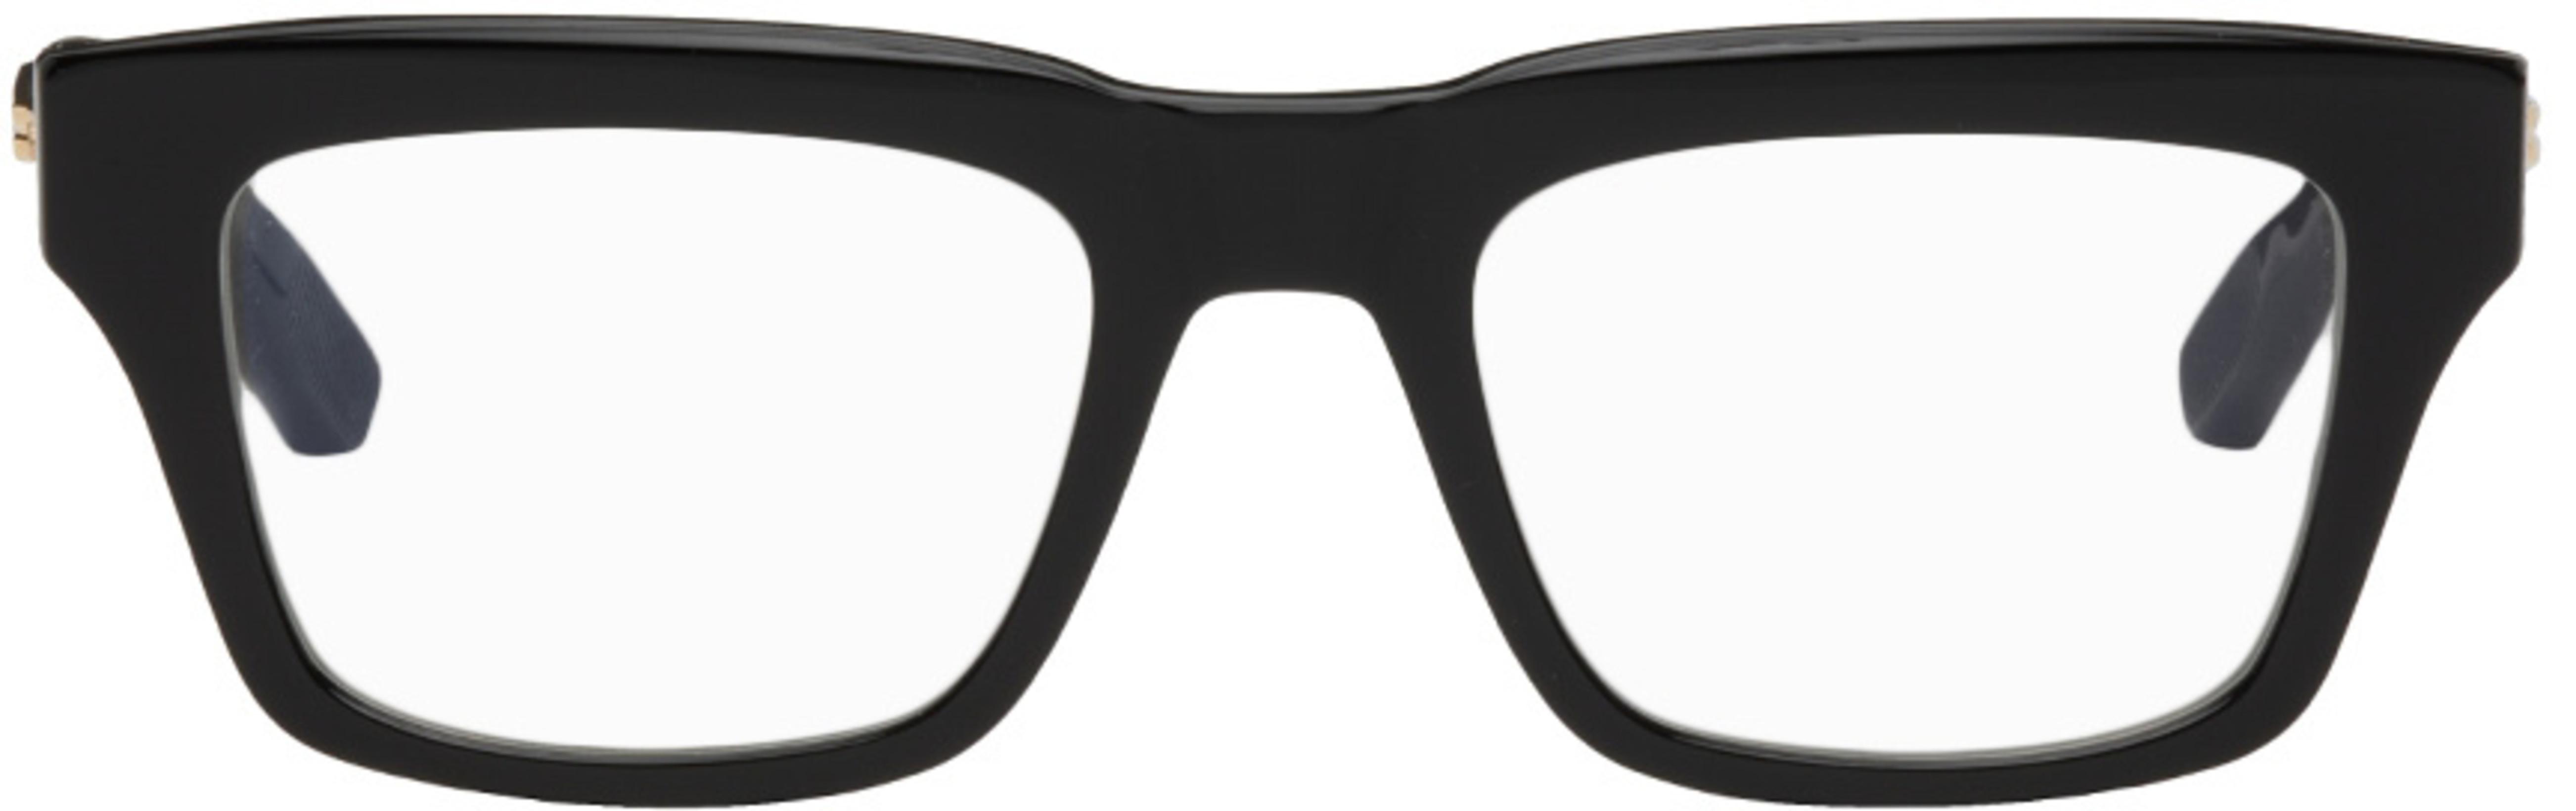 Black Wasserman Glasses by DITA